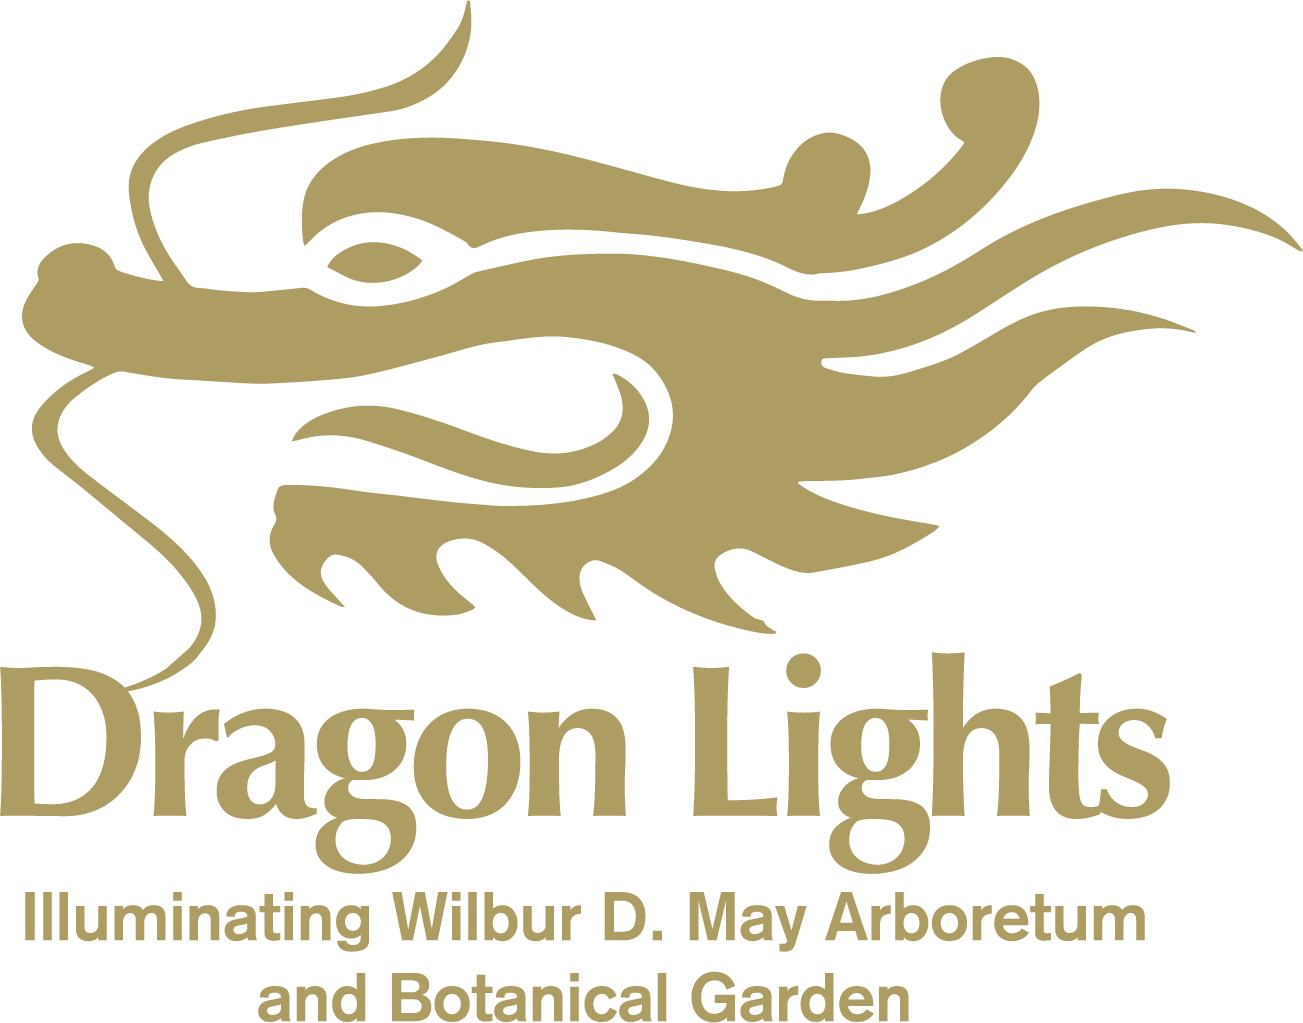 DRAGON LIGHTS -Wilbur D. May Arboretum and Botanical Garden Illuminated – June 30 to August 5